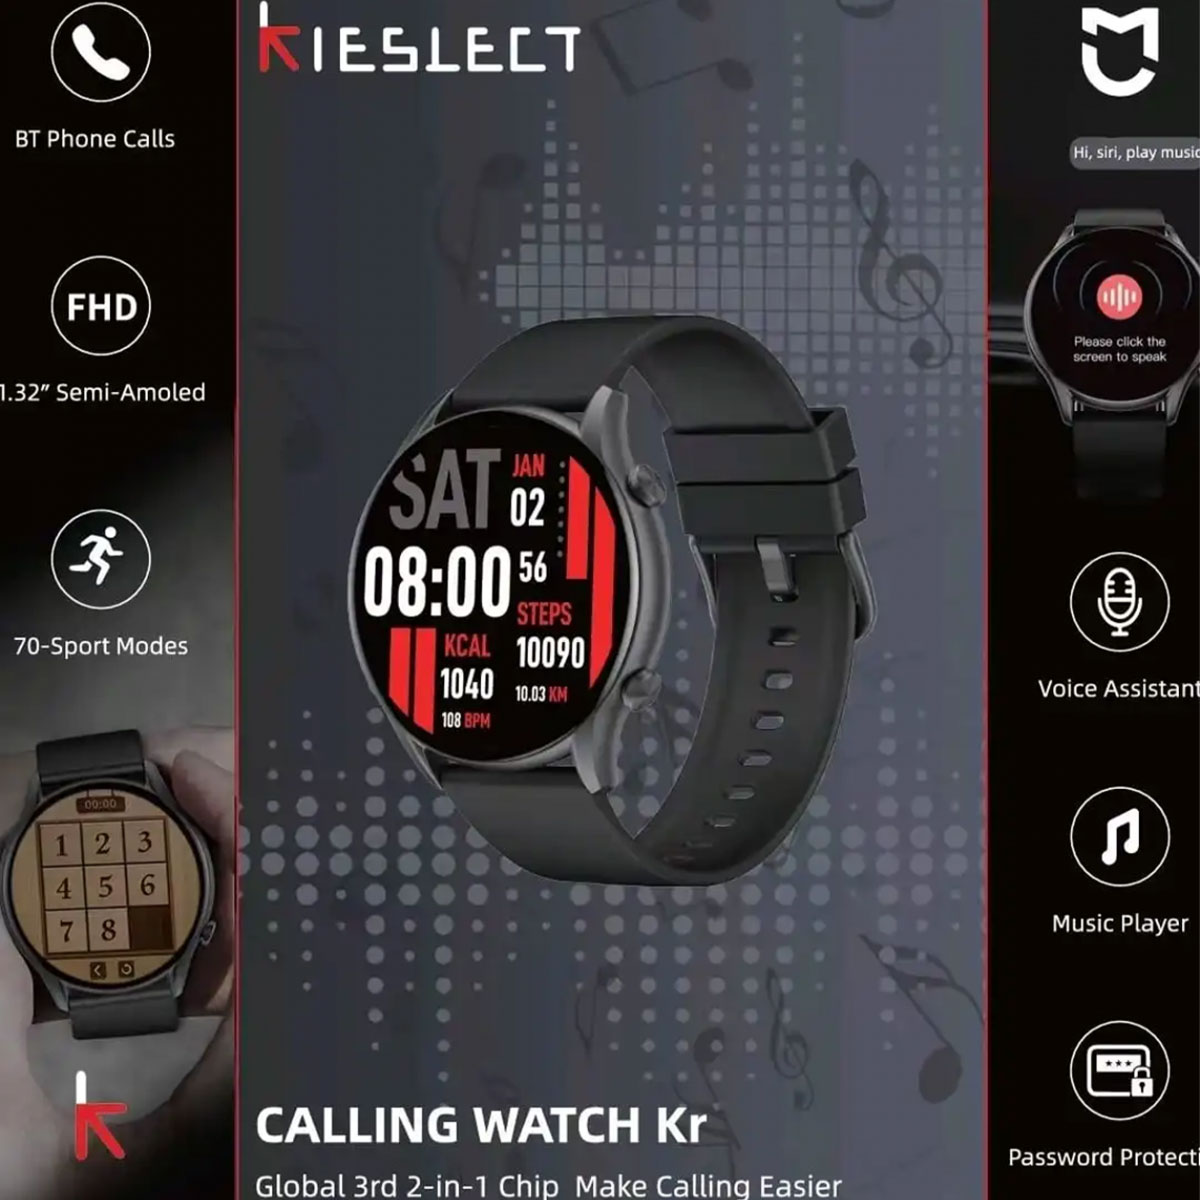 Kr pro часы. Kieslect kr Smart watch. Смарт-часы kieslect kr. Смарт-часы Xiaomi kieslect Smart watch kr, черные. Умные часы Xiaomi kieslect calling watch kr Pro, черный.